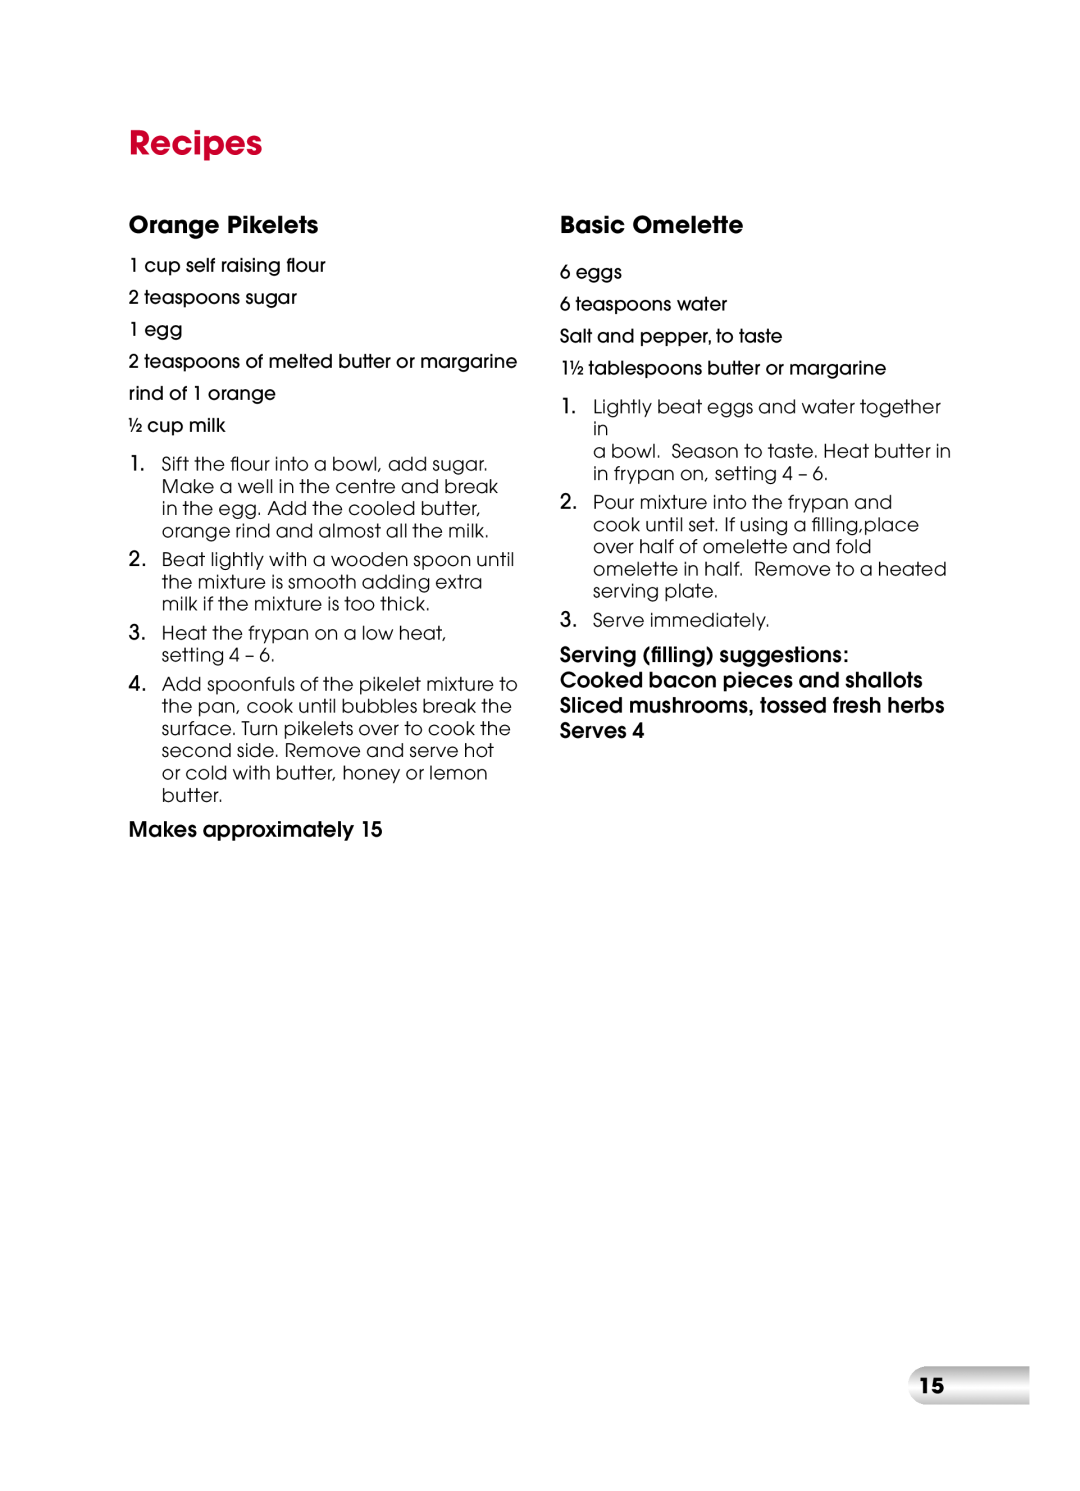 Kambrook KEF120 manual Recipes, Orange Pikelets, Basic Omelette 